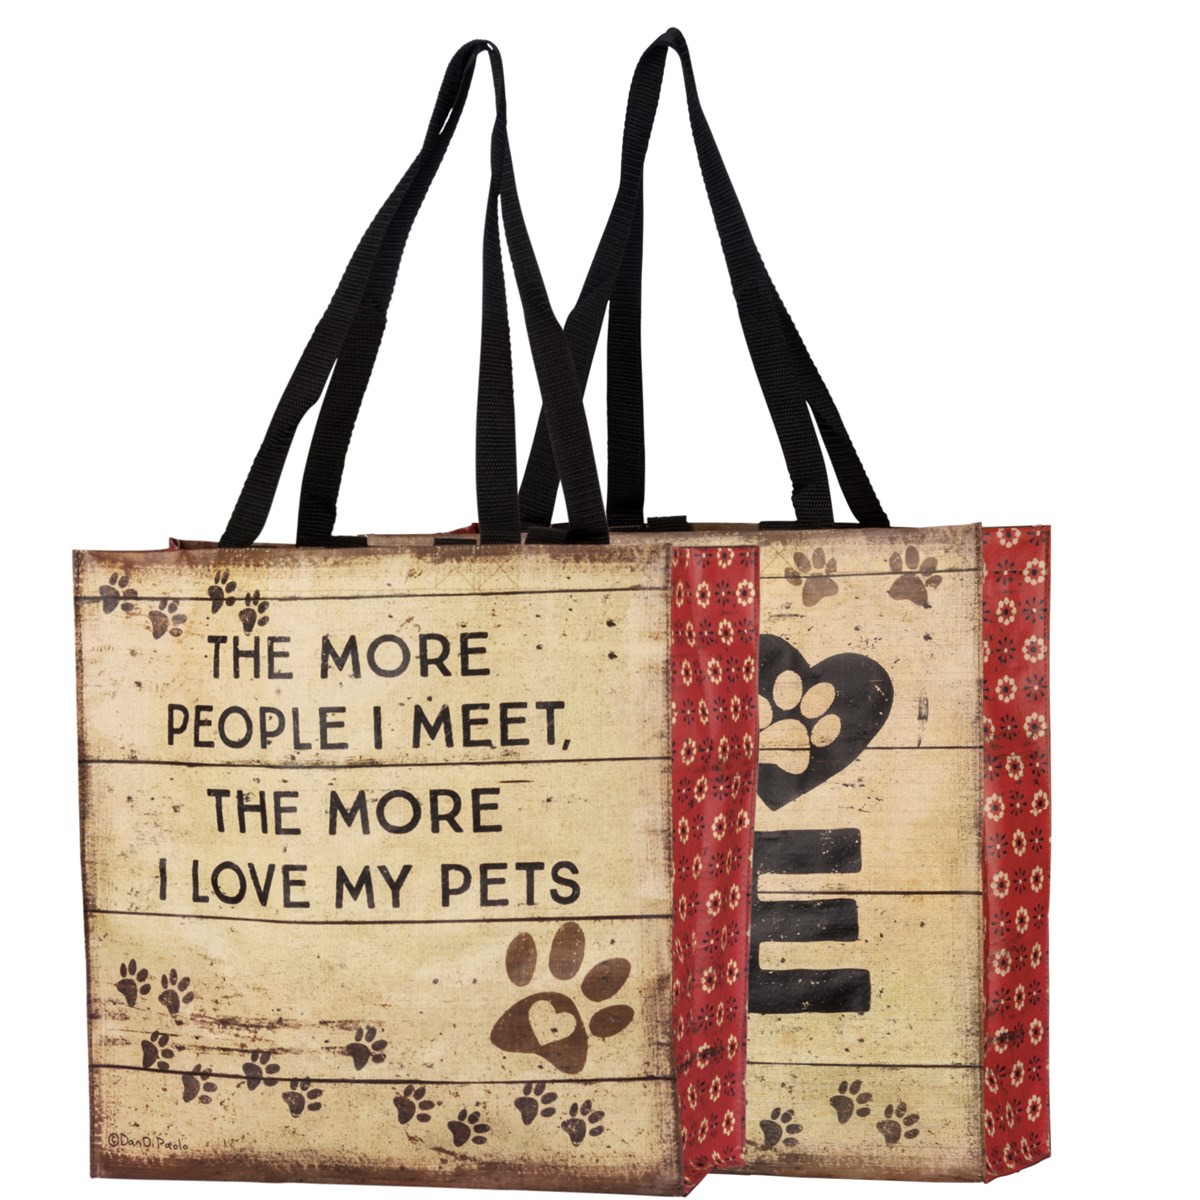 Love My Pets Market Tote - Post-Consumer Material, Nylon